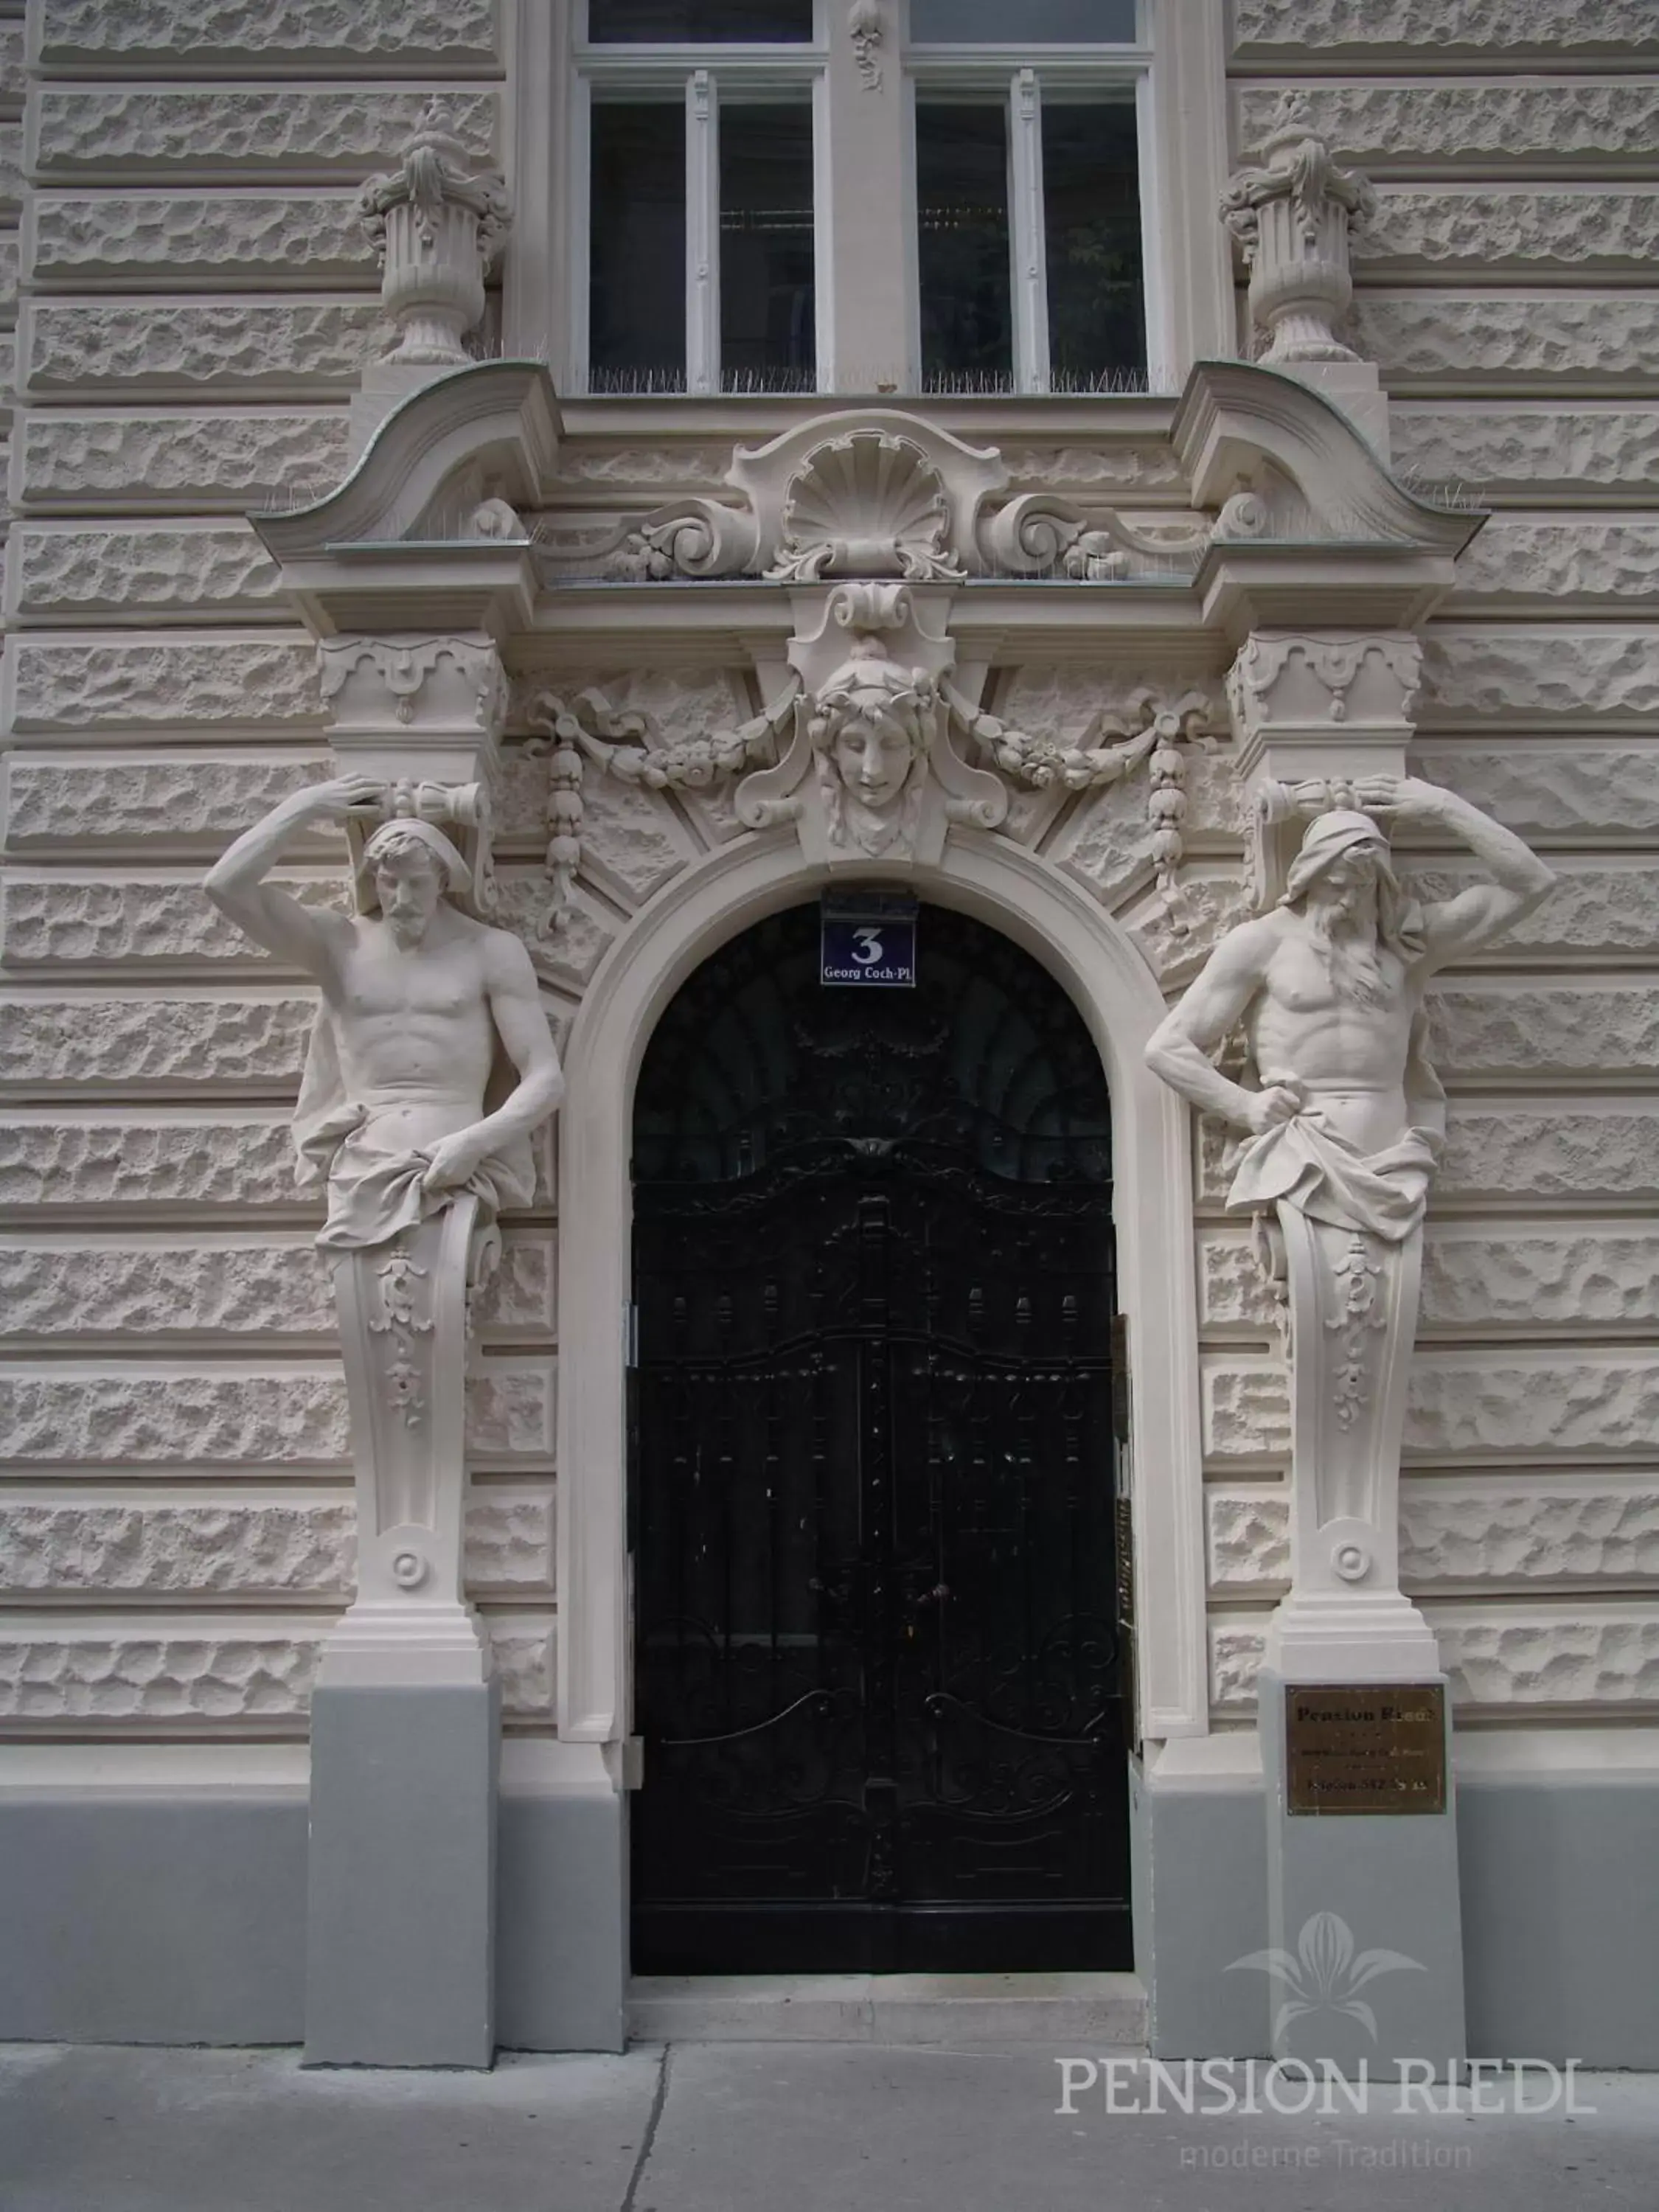 Facade/entrance in Pension Riedl